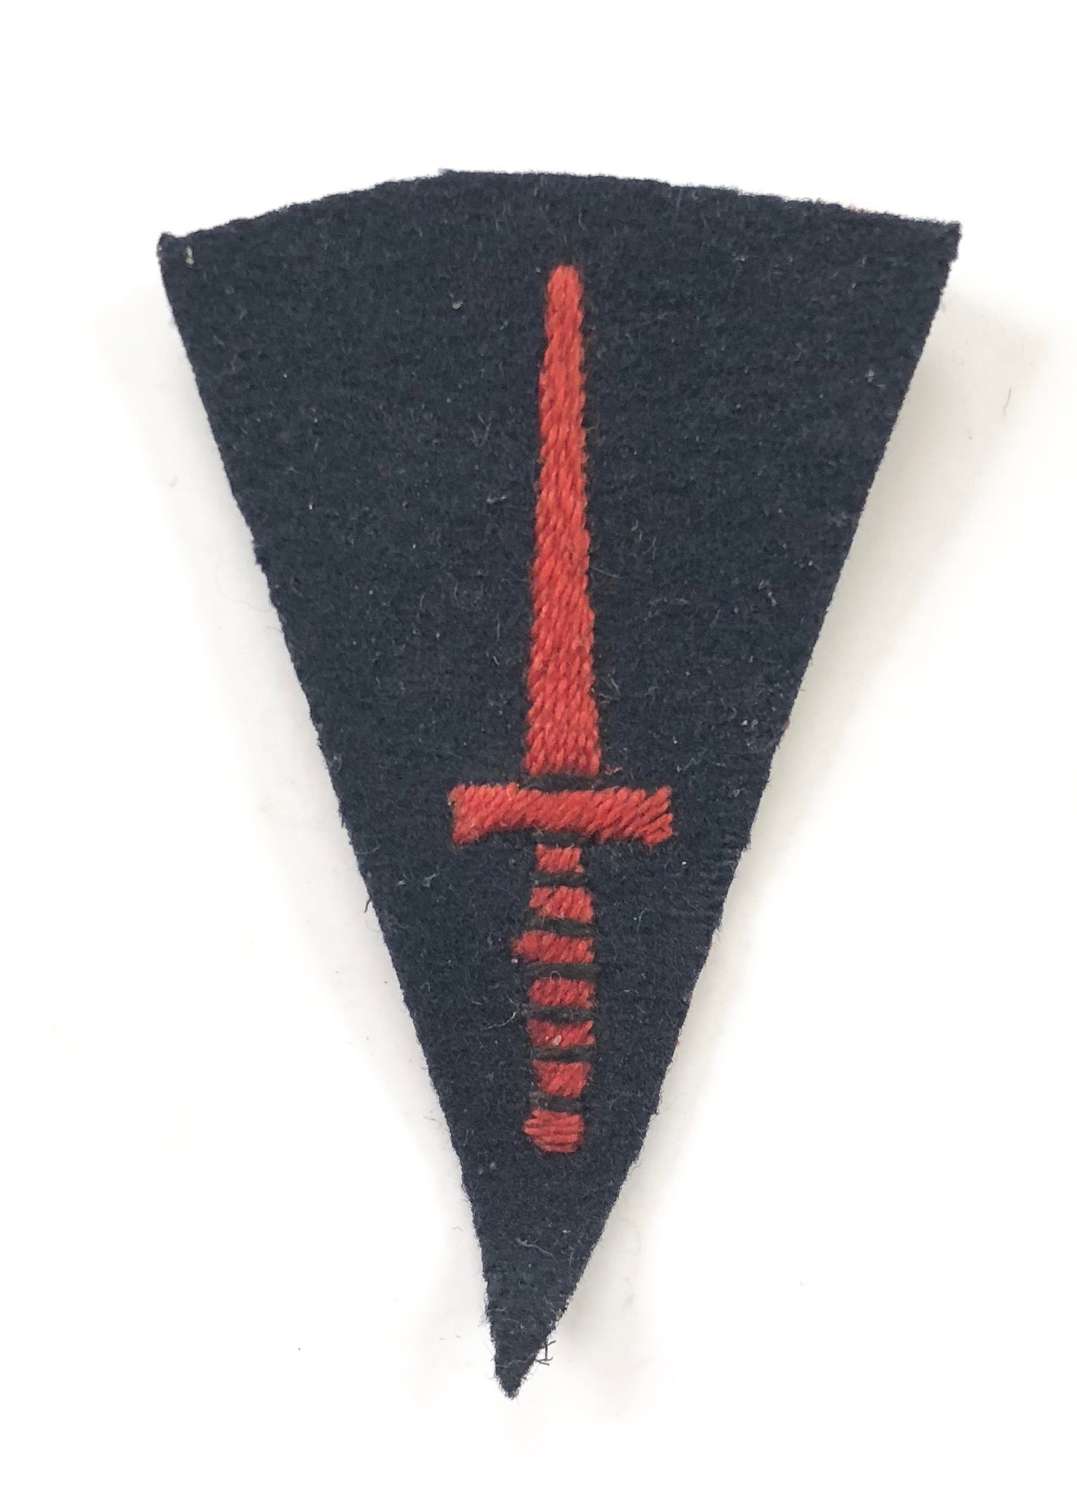 WW2 Royal Marine Commando Knife Cloth Badge.